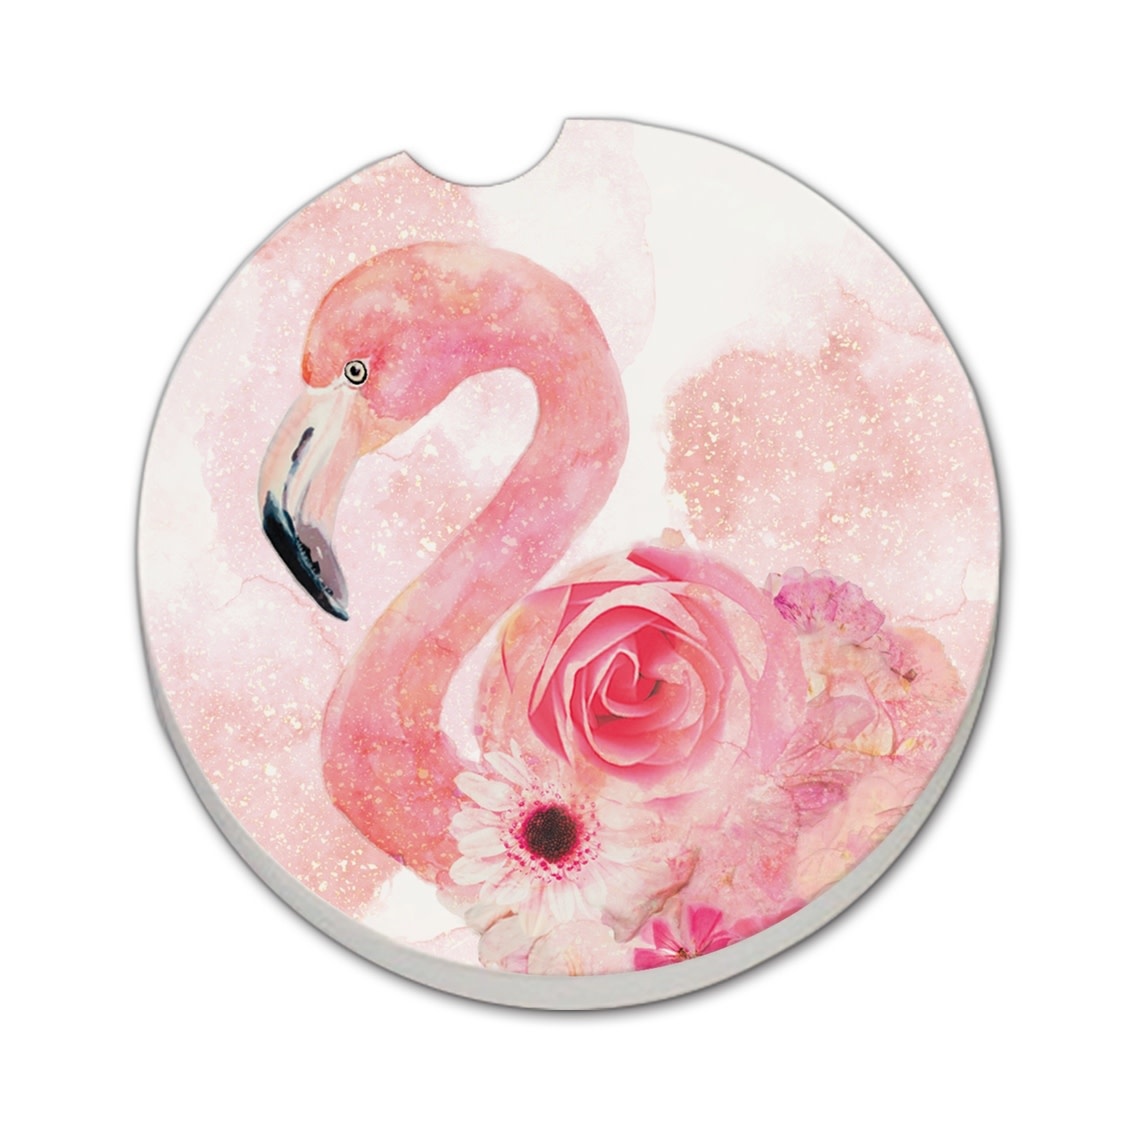 CounterArt and Highland Home "Floral Flamingo" Stone Car Coaster